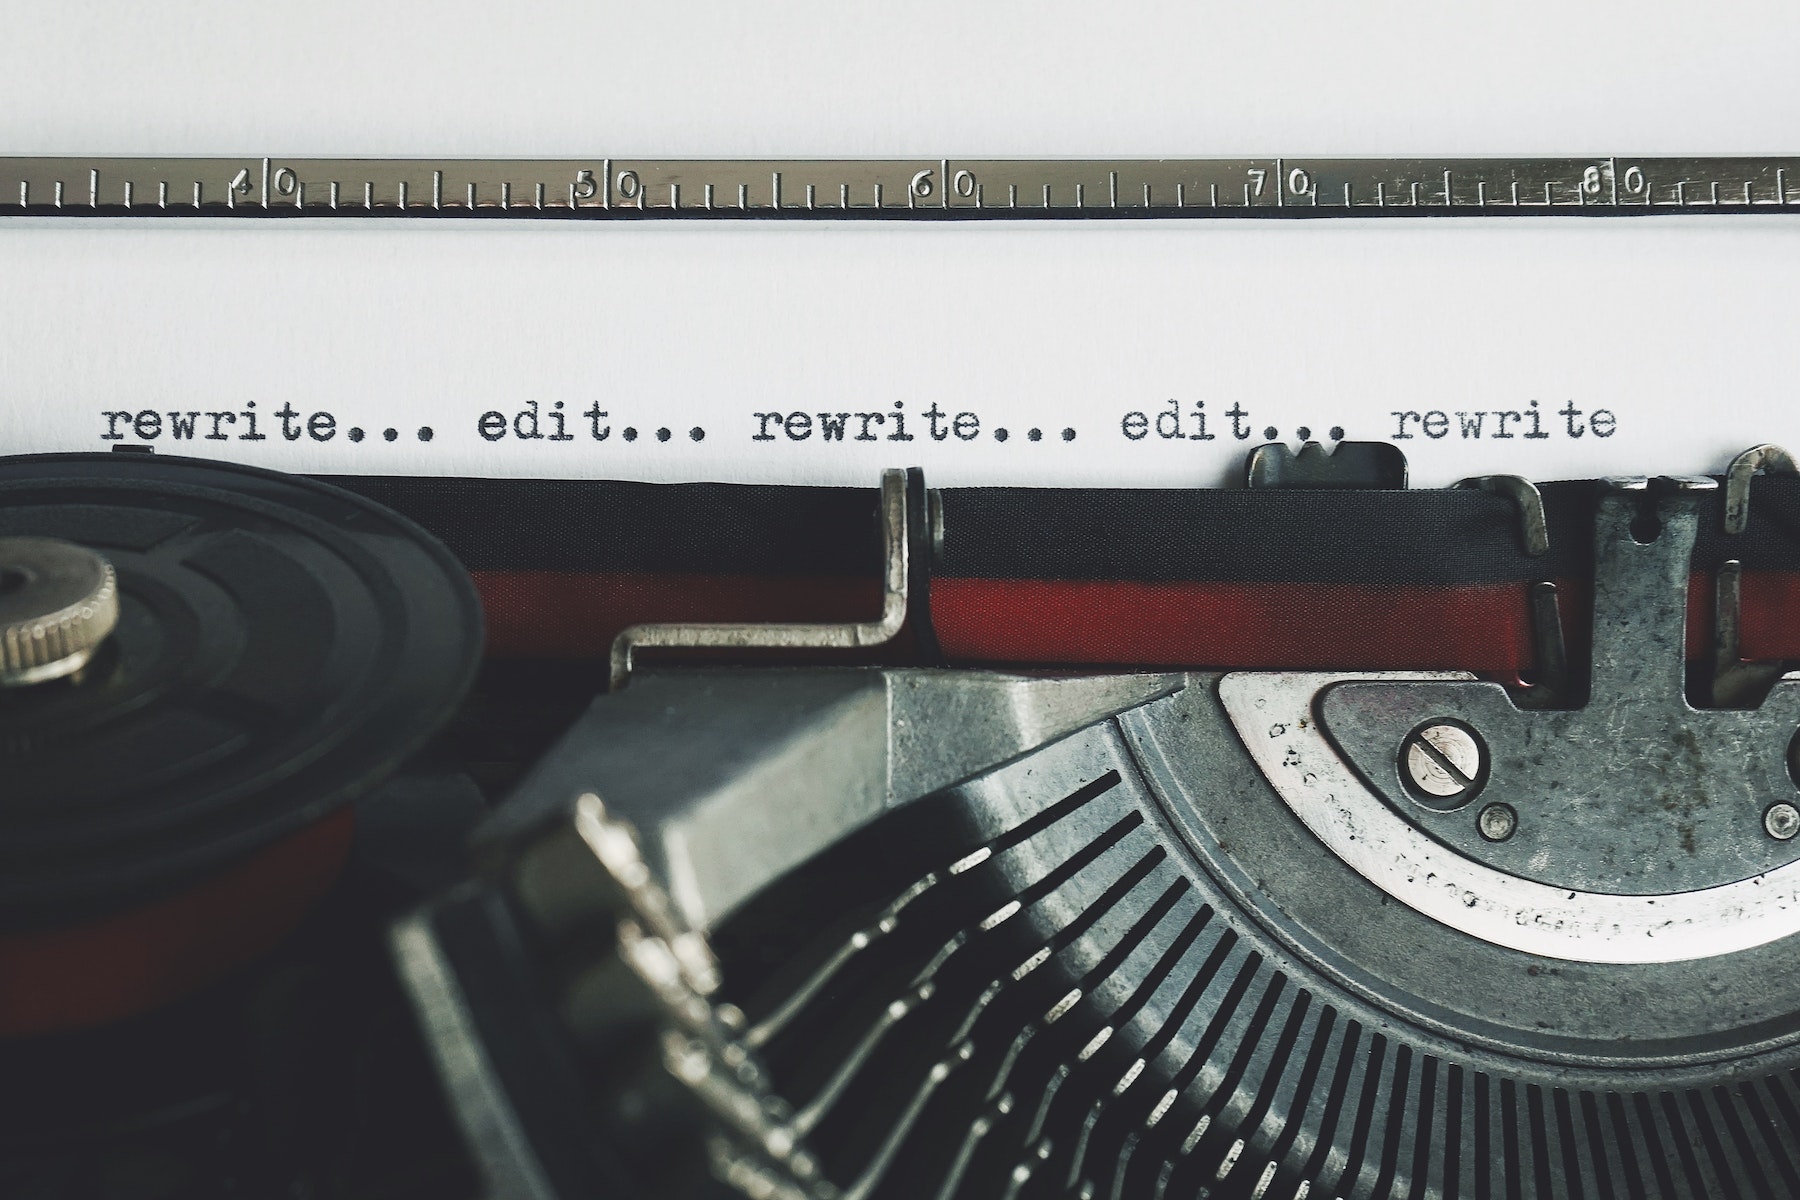 Rewrite Edit Text on a Typewriter